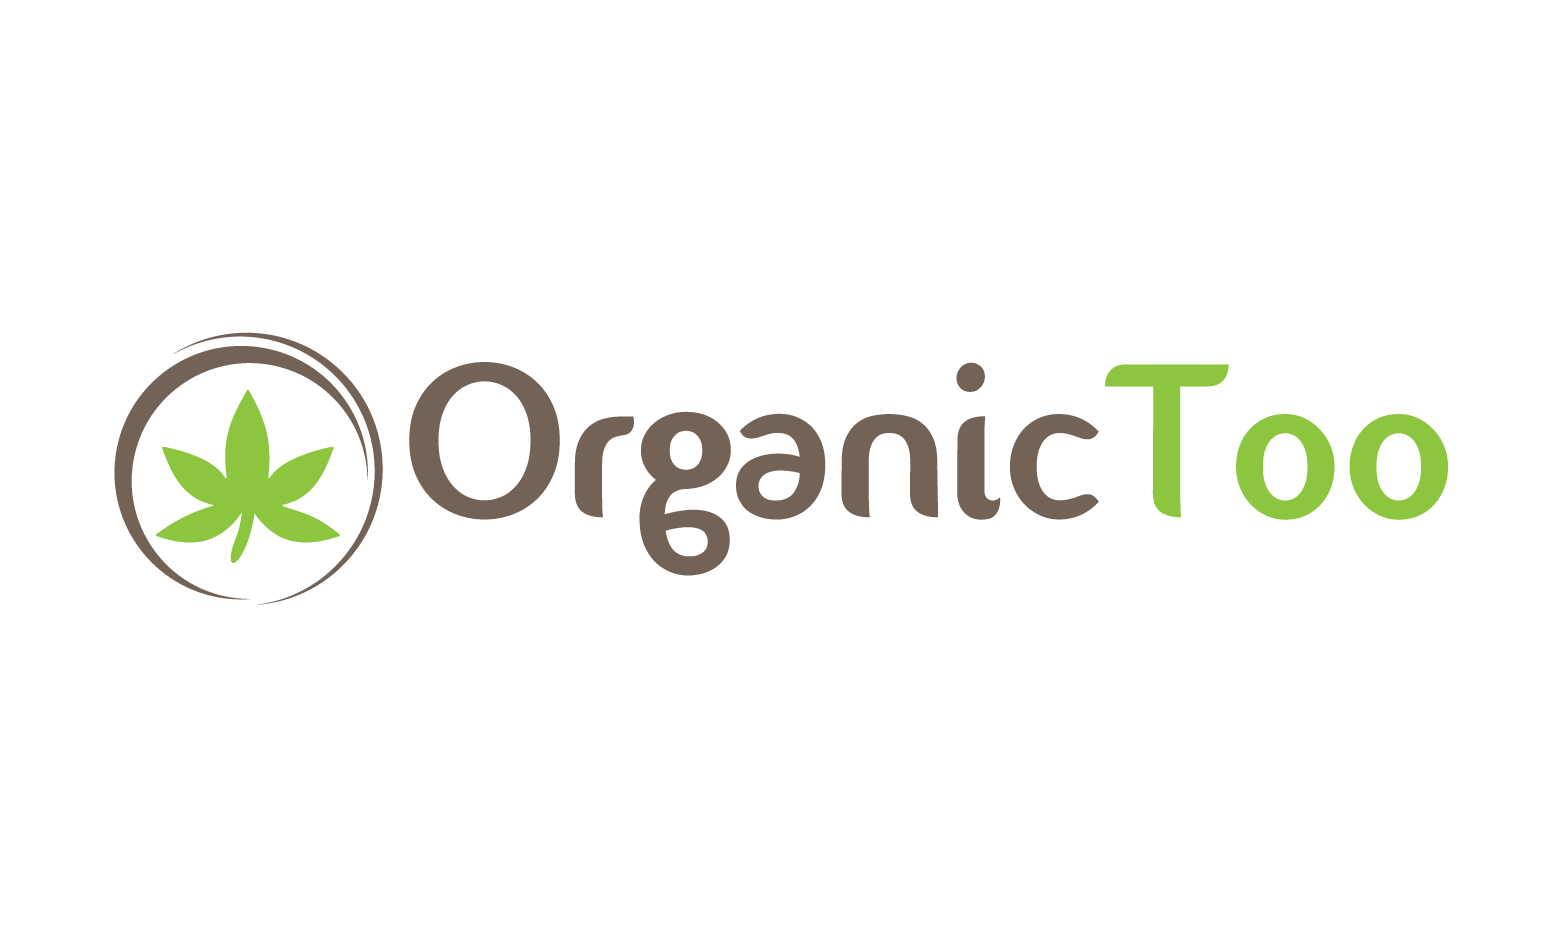 OrganicToo.com - Creative brandable domain for sale